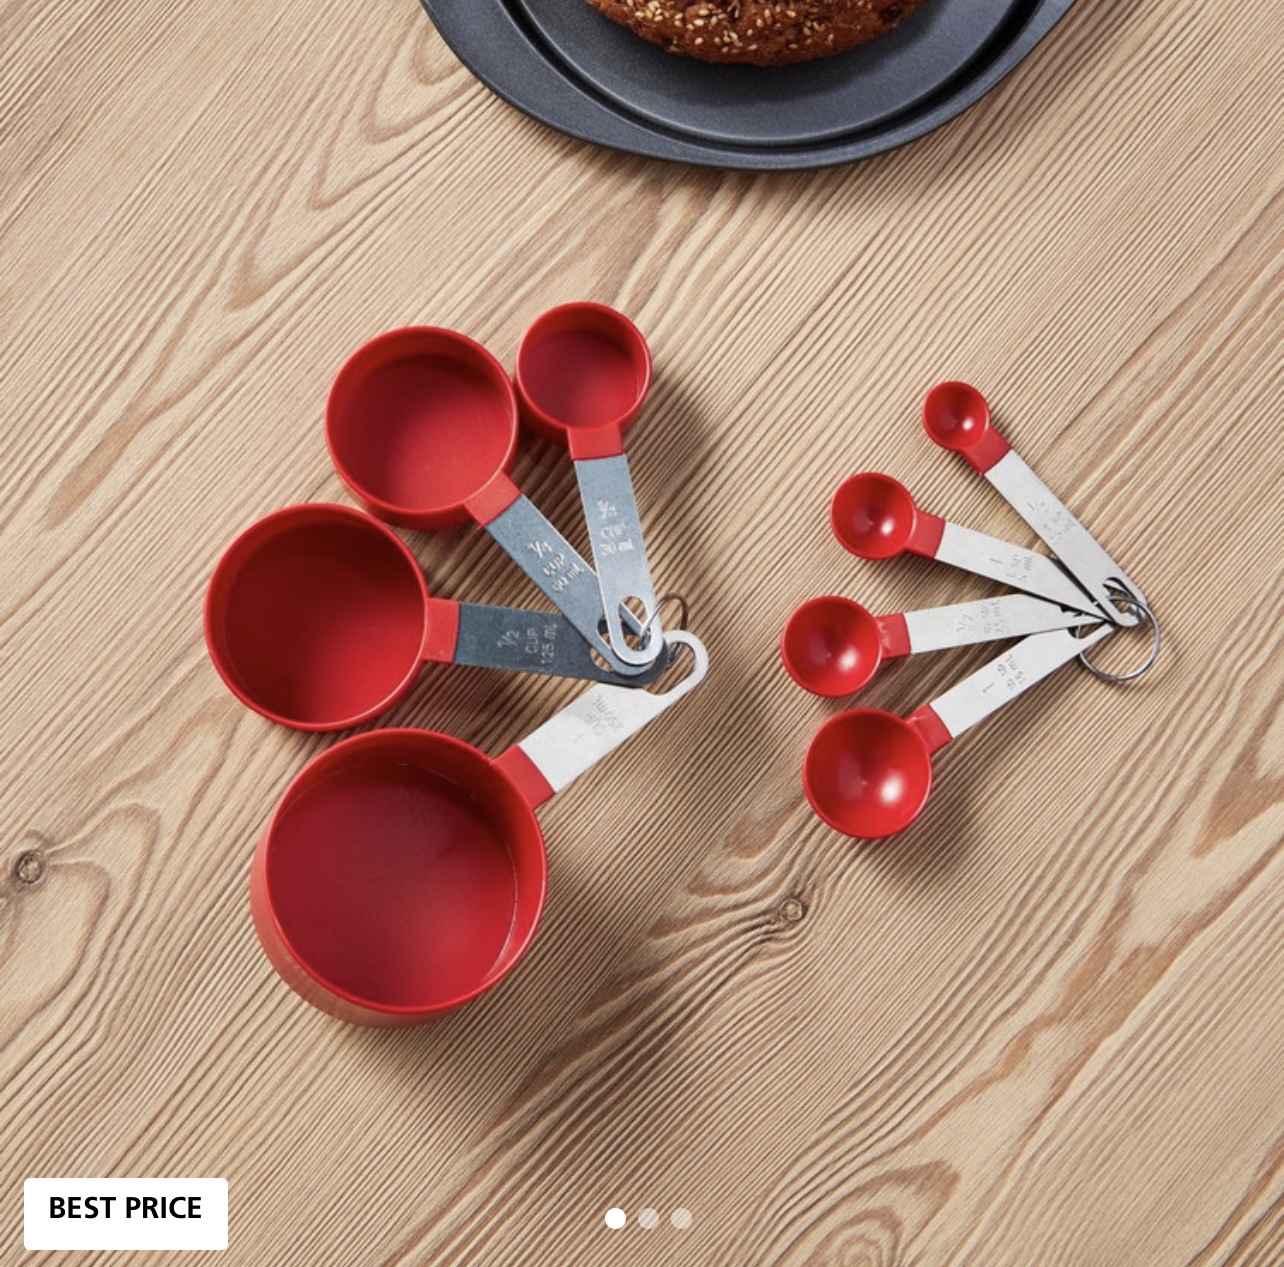 Core Kitchen Measuring Cup & Spoon Set (8-Piece) DBC30628